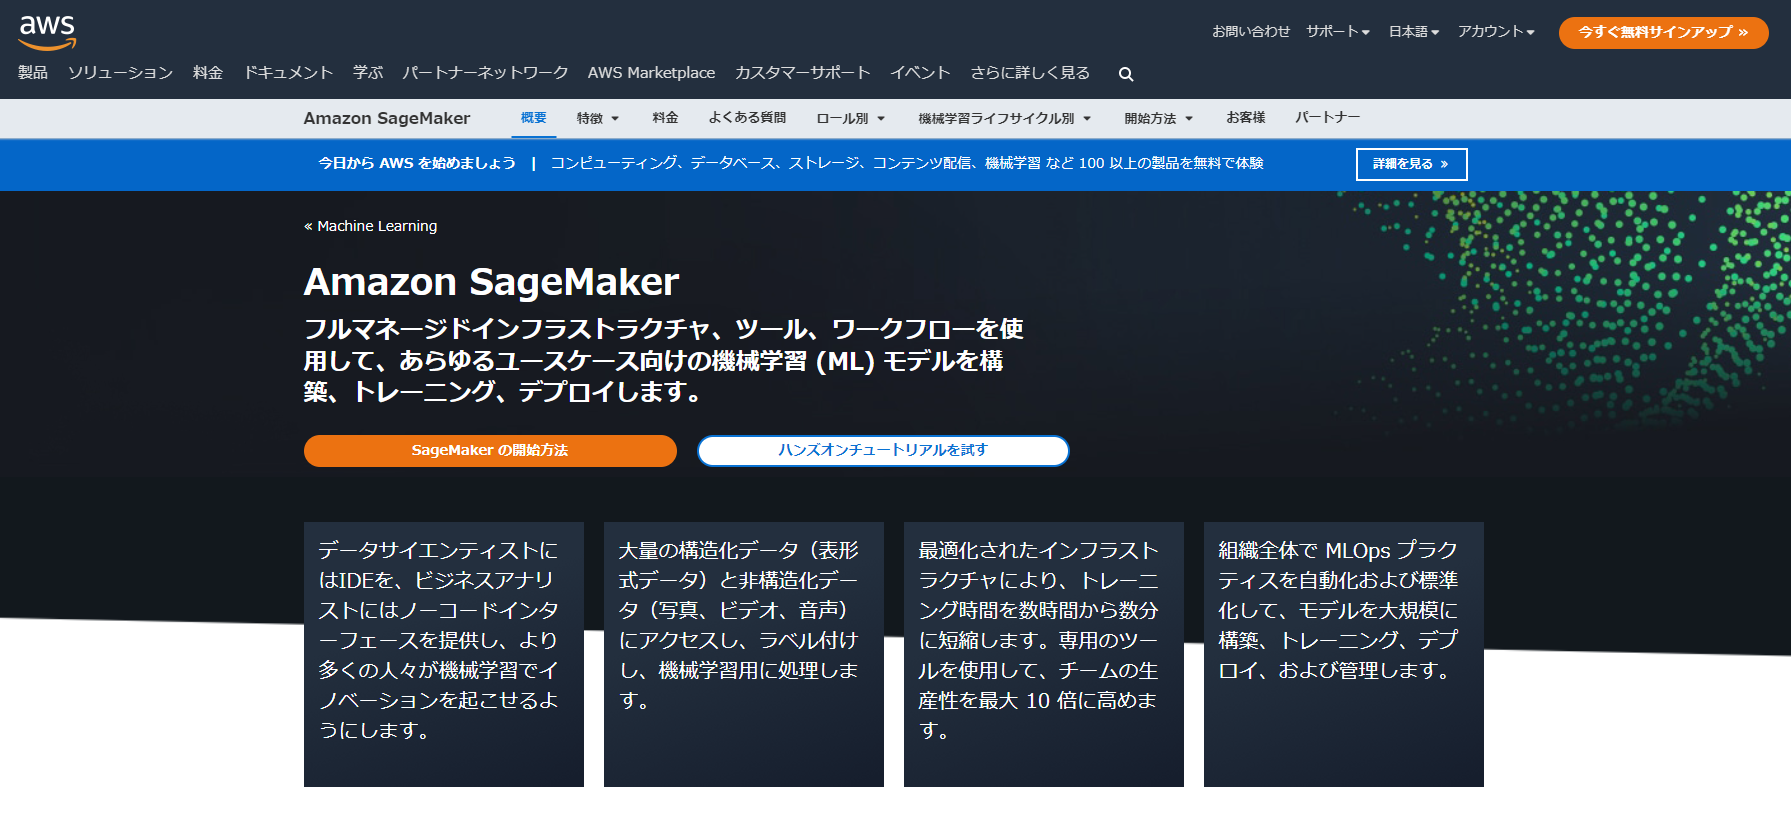 Amazon SageMaker_AWS公式サイト.PNG